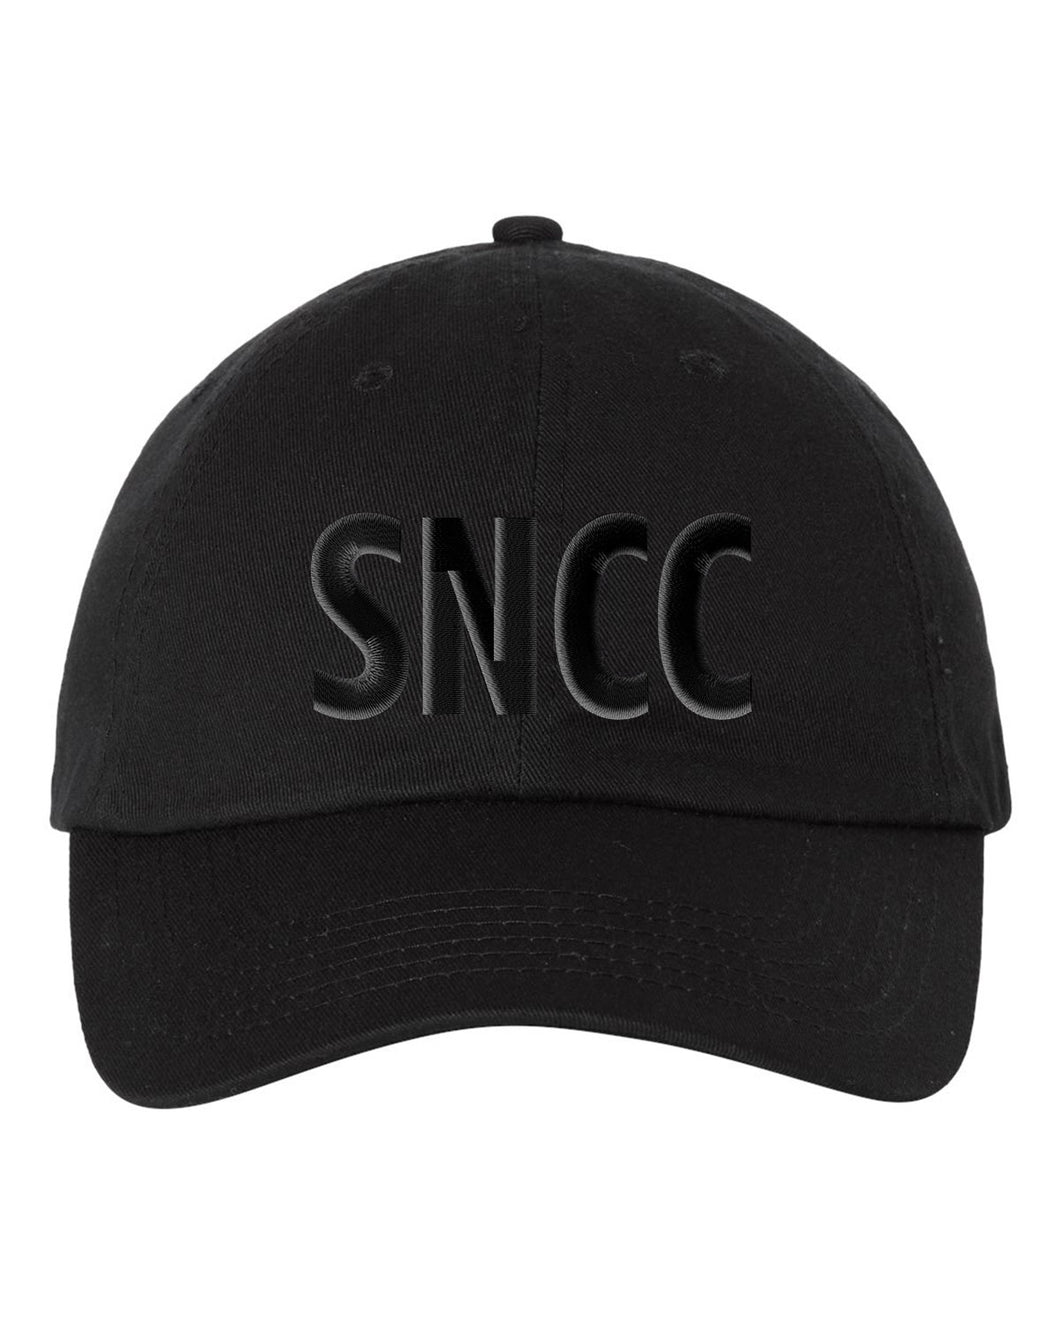 SNCC Black on Black Embroidered Hat